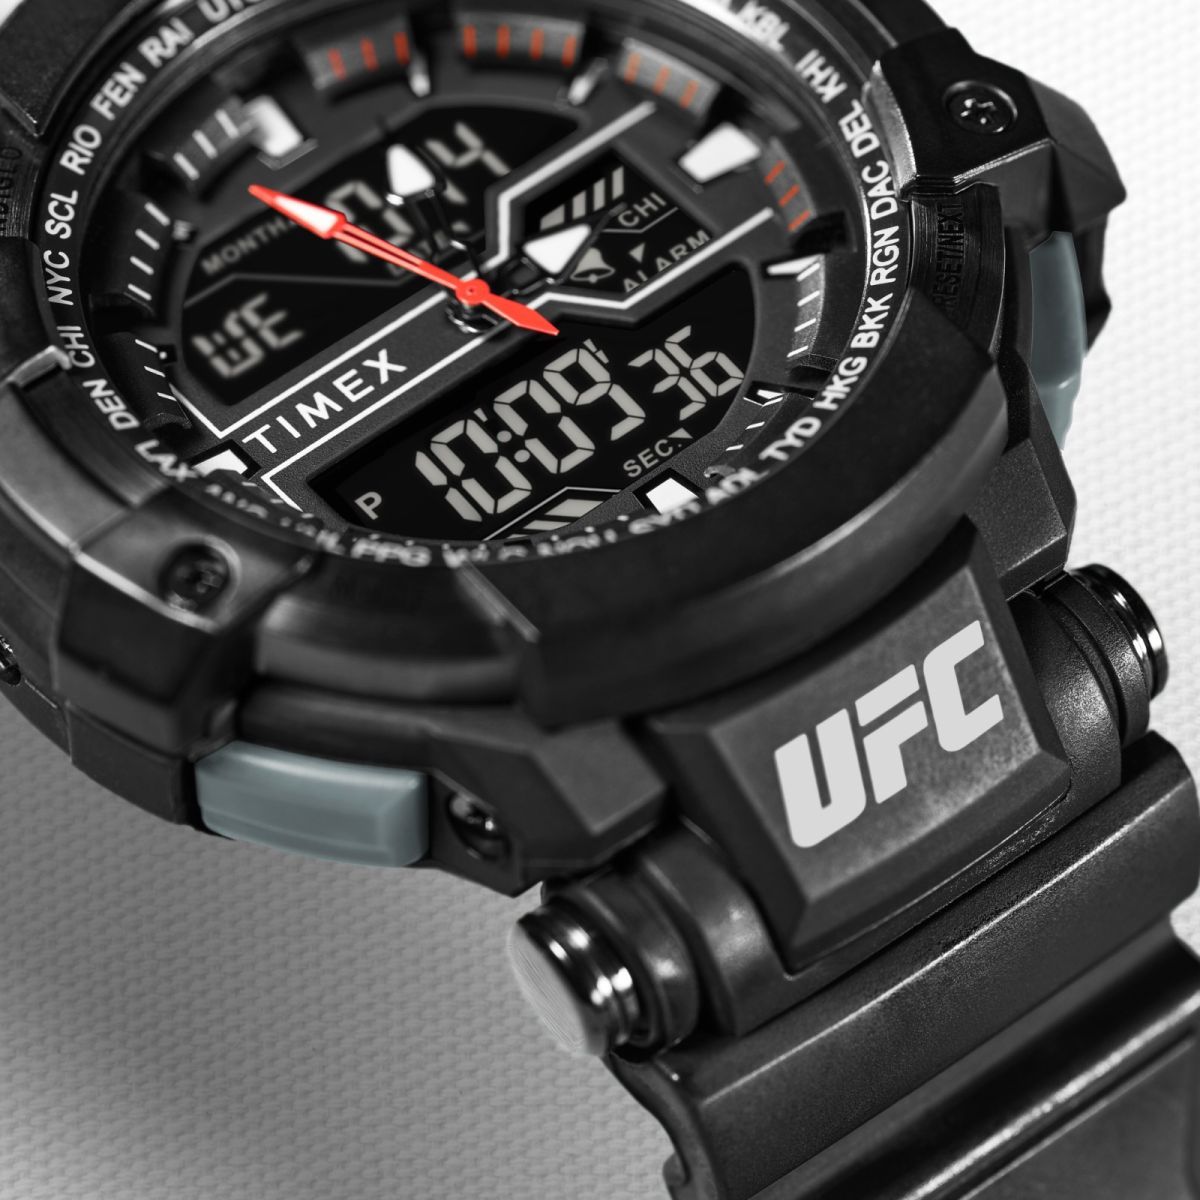 Timex UFC Combat watch